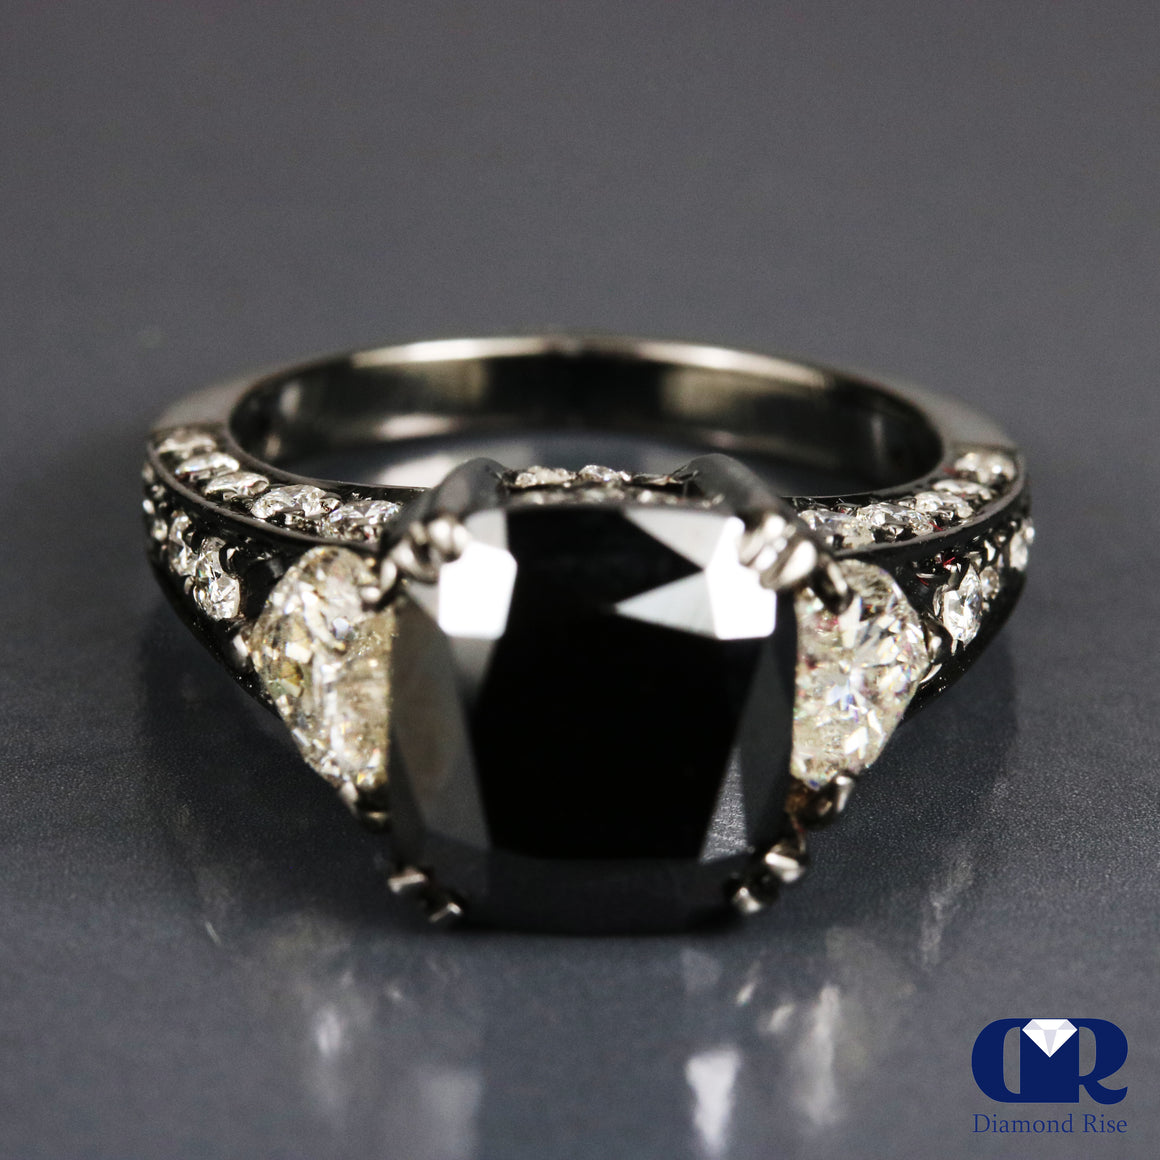 4.65 Carat Cushion Cut Black Diamond Engagement Ring In 14K White Gold